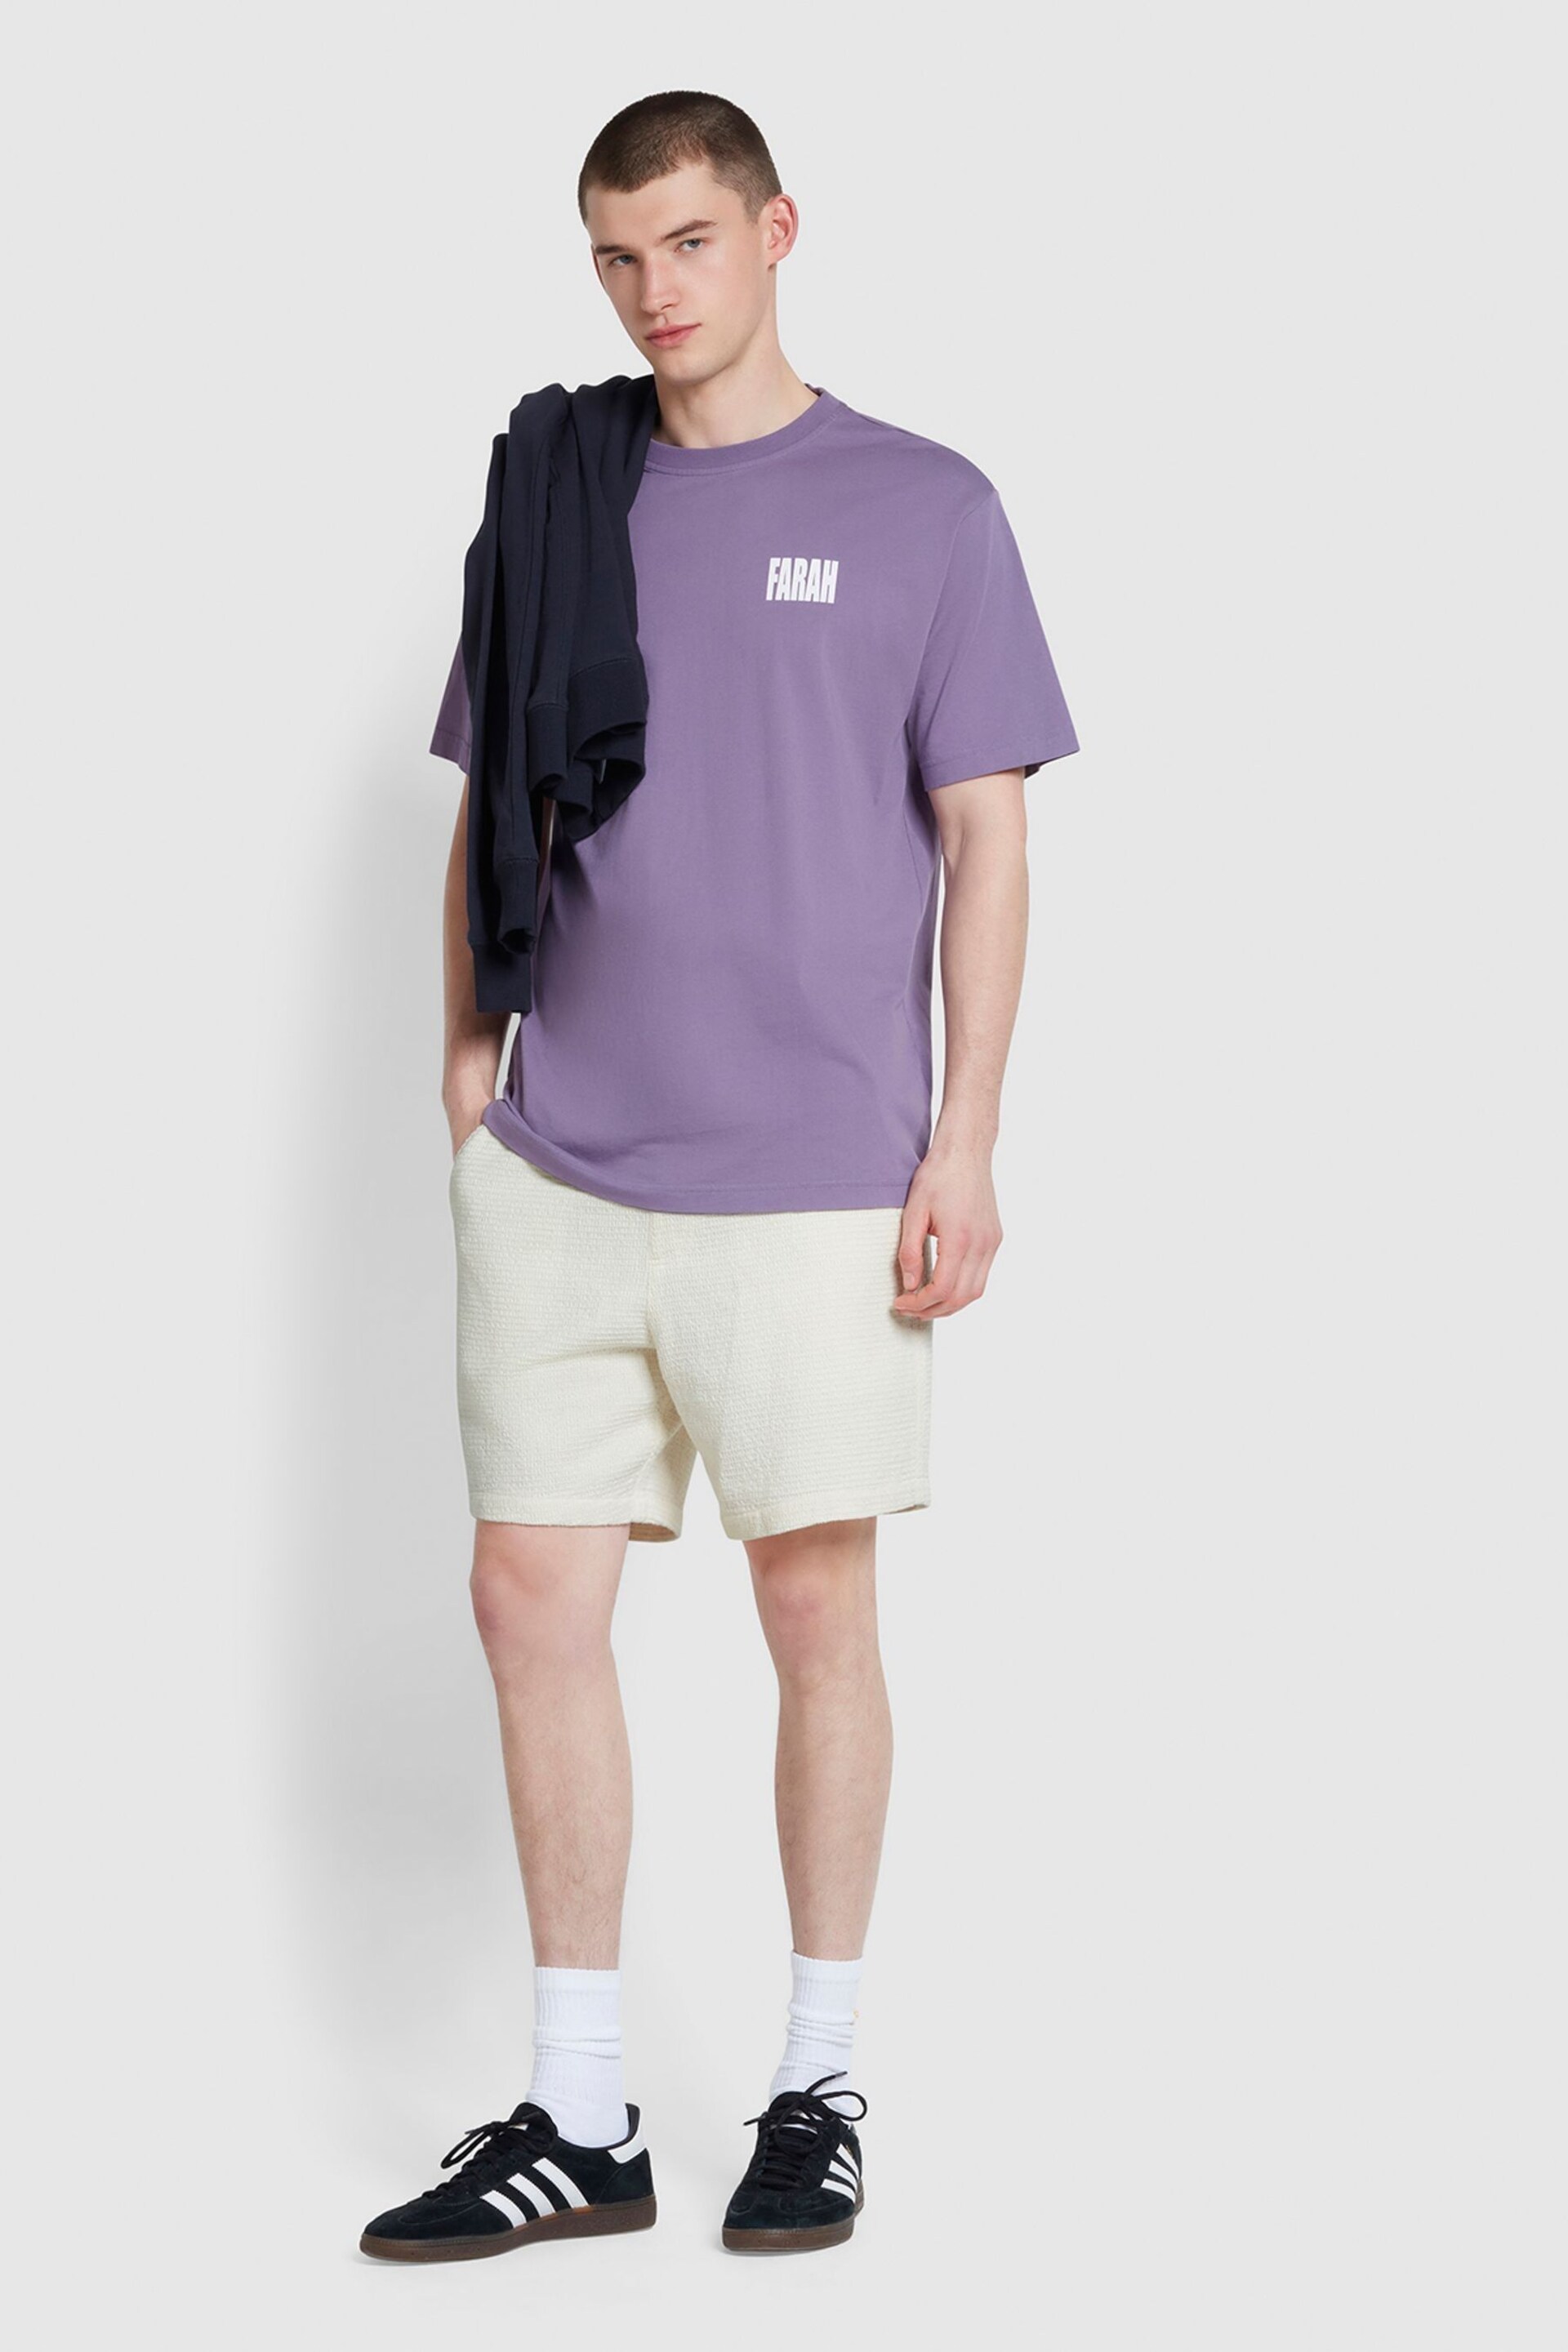 Farah Purple Damon Graphic T-Shirt - Image 2 of 4